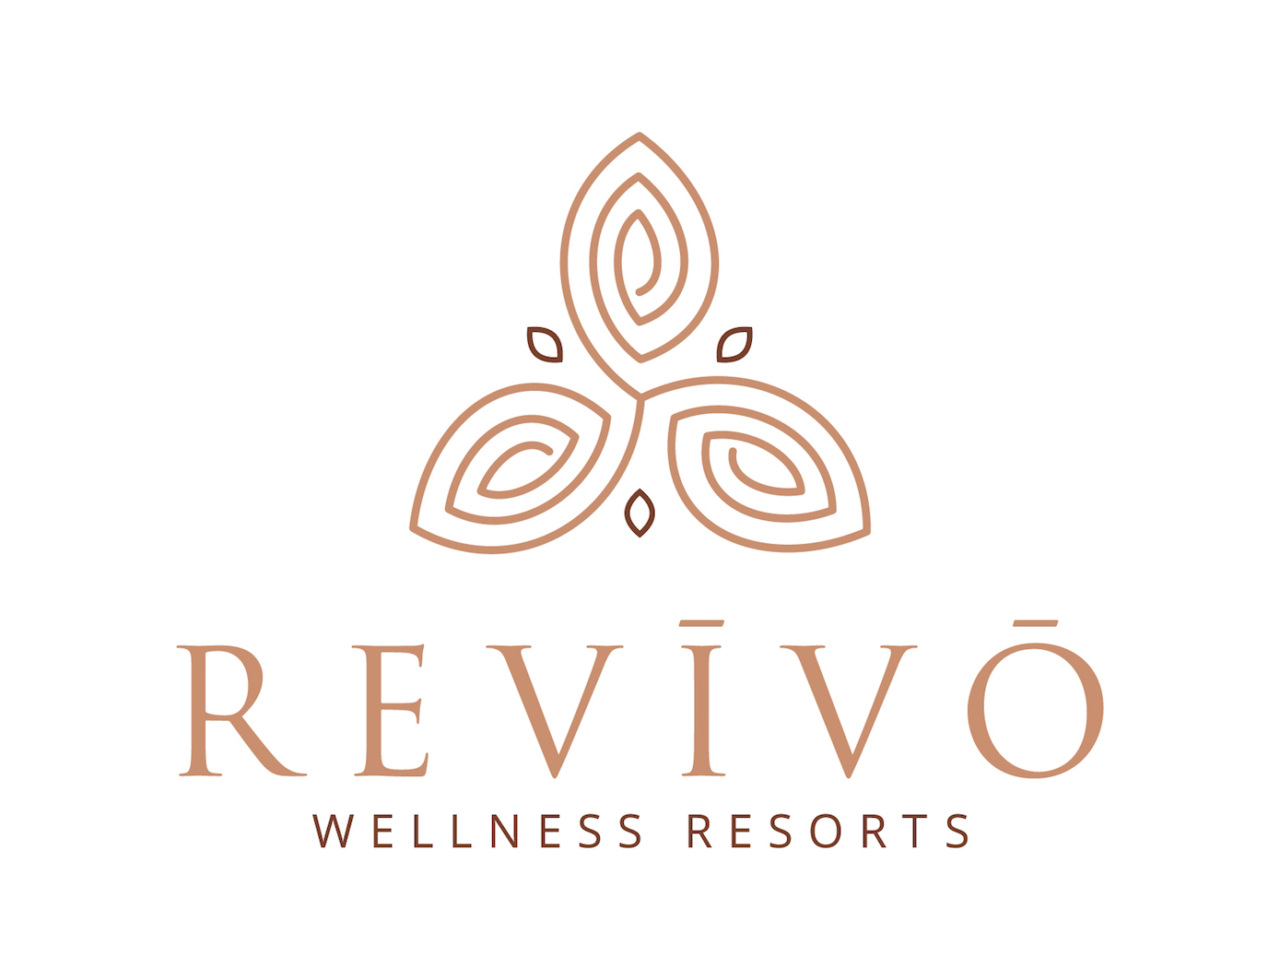 REVIVO-white-logo--1280x980.jpg